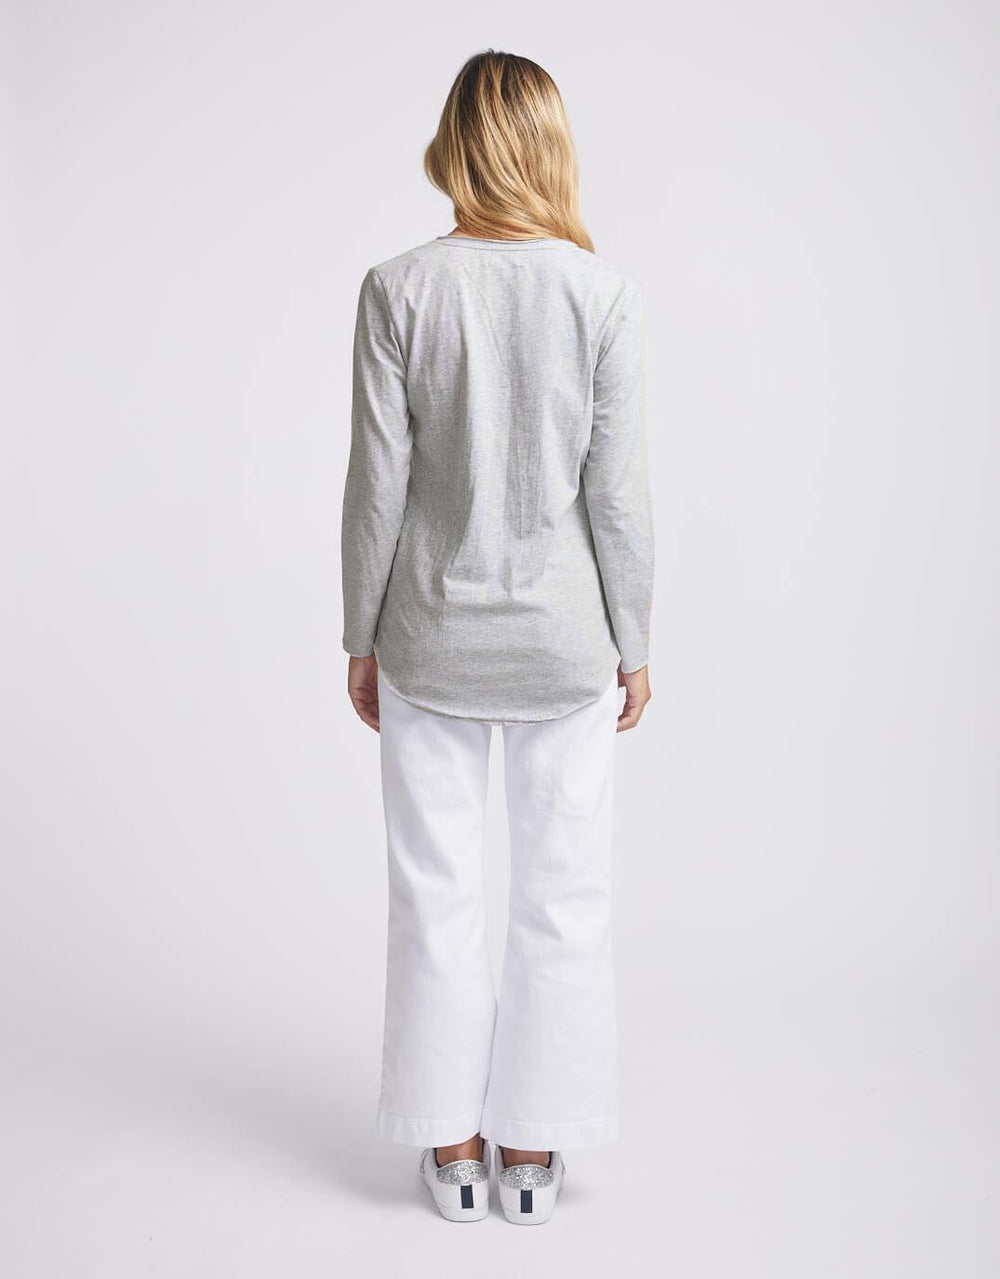 white-co-original-v-neck-long-sleeve-t-shirt-snow-grey-womens-clothing